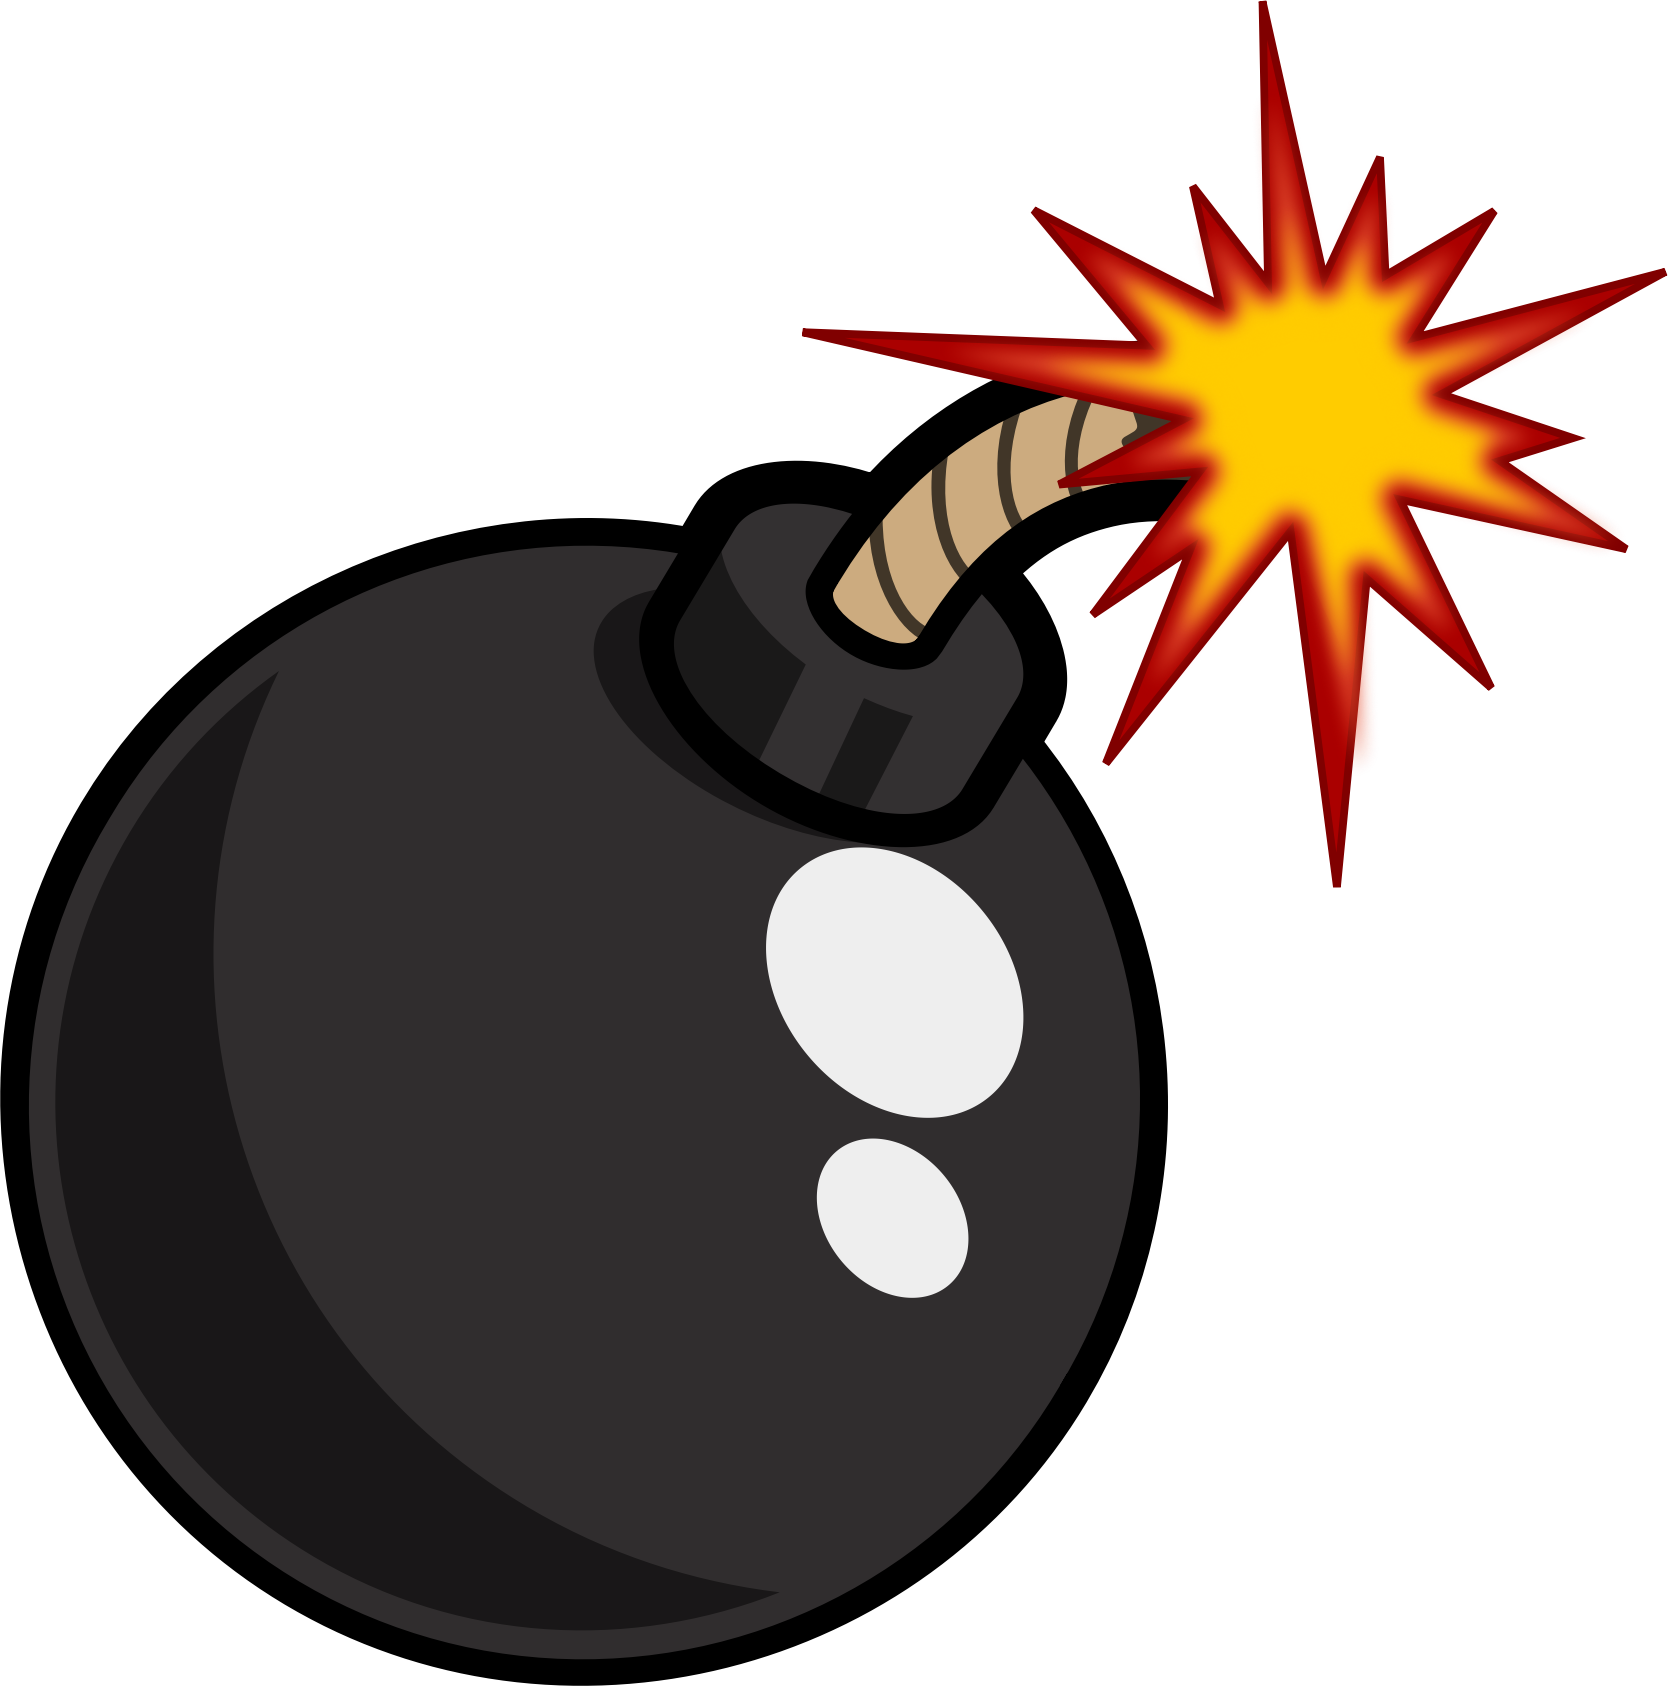 Black Bomb Vector Clipart image